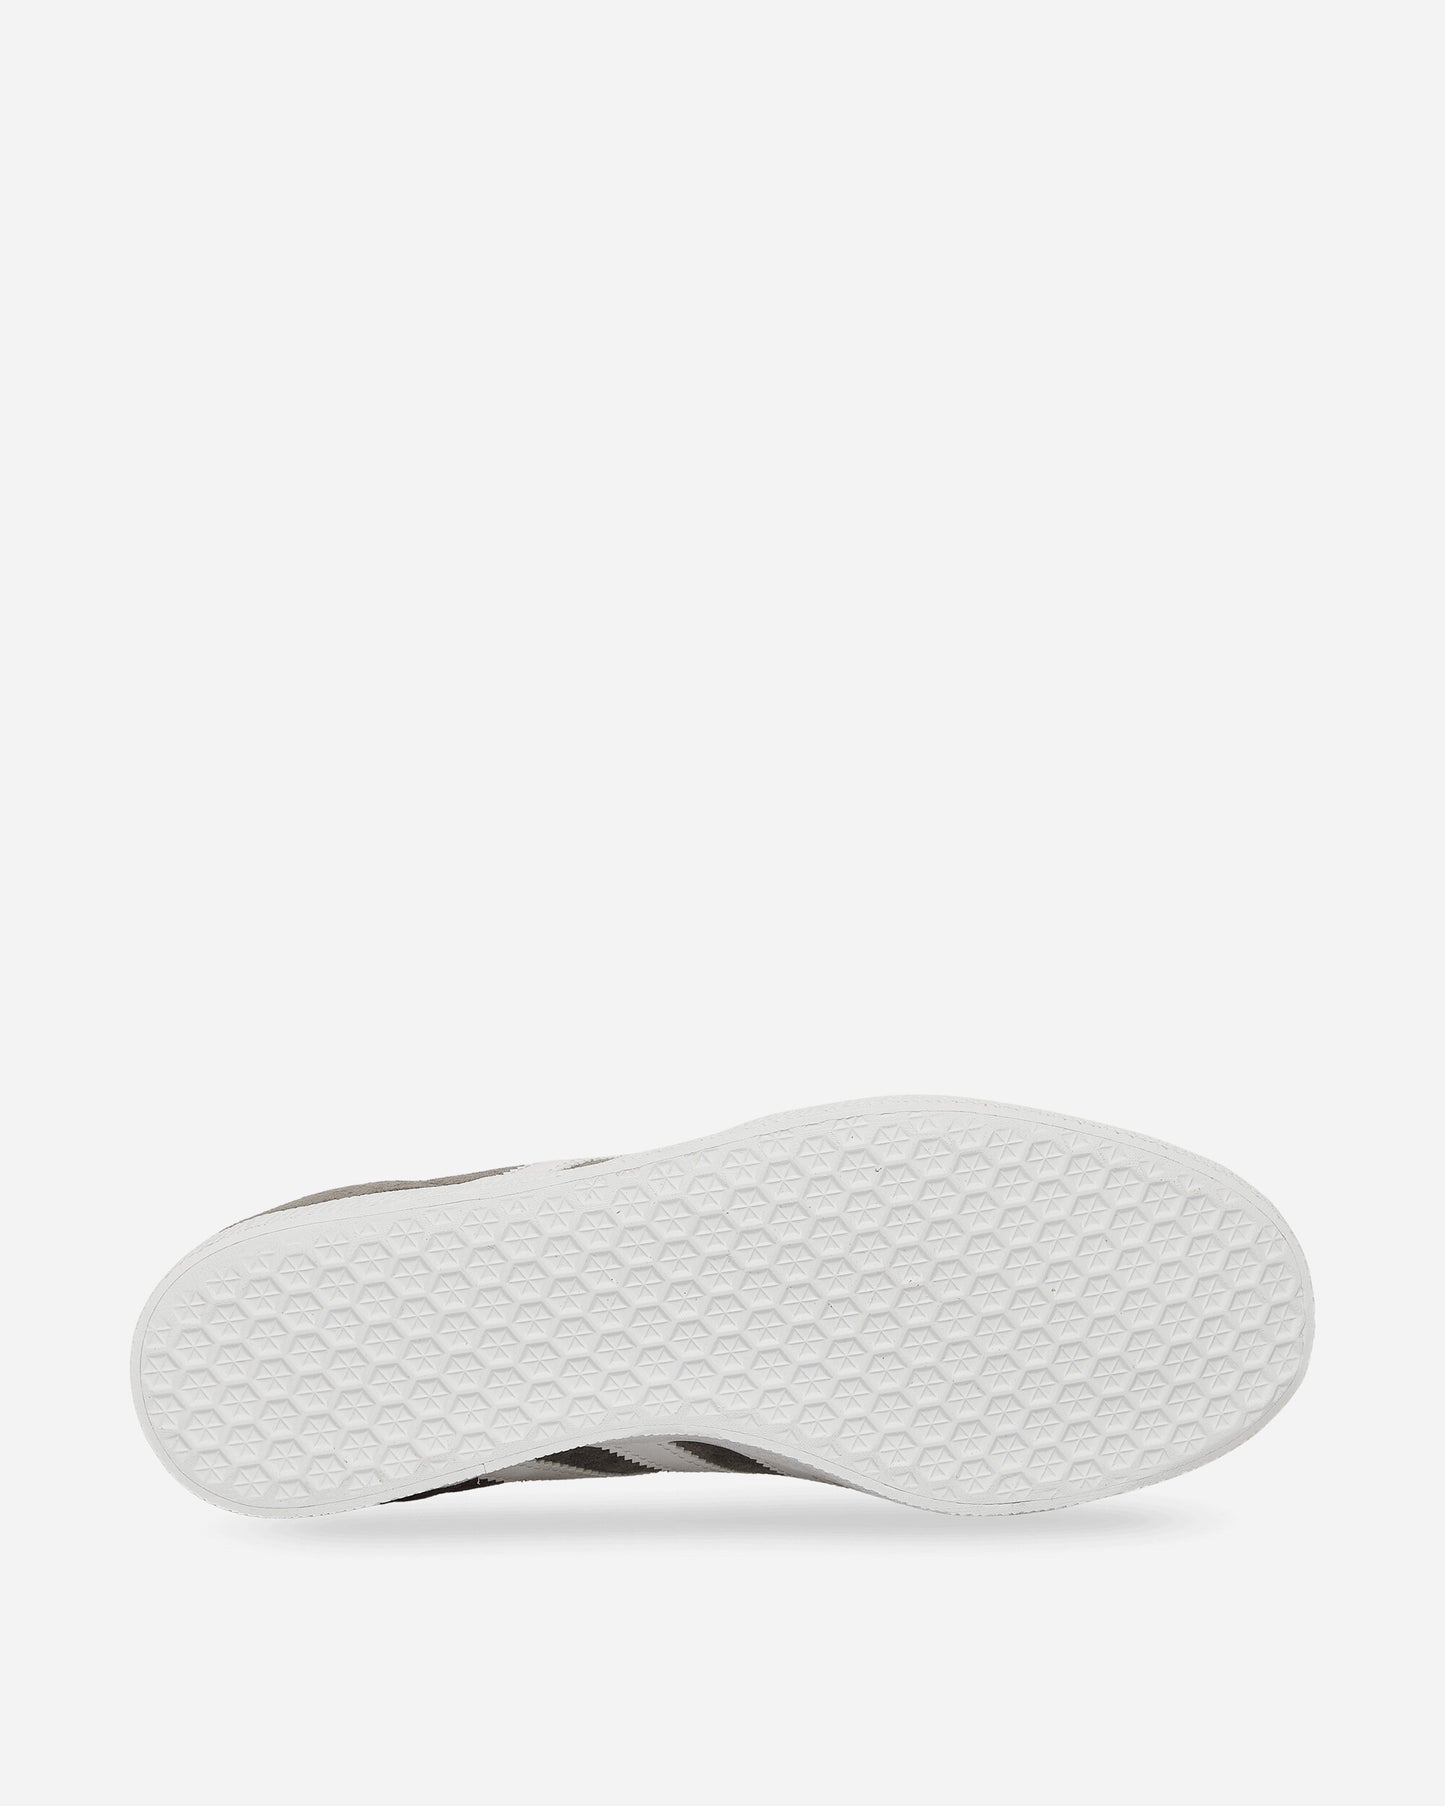 adidas Gazelle Dgsogr/White Sneakers Low BB5480 001